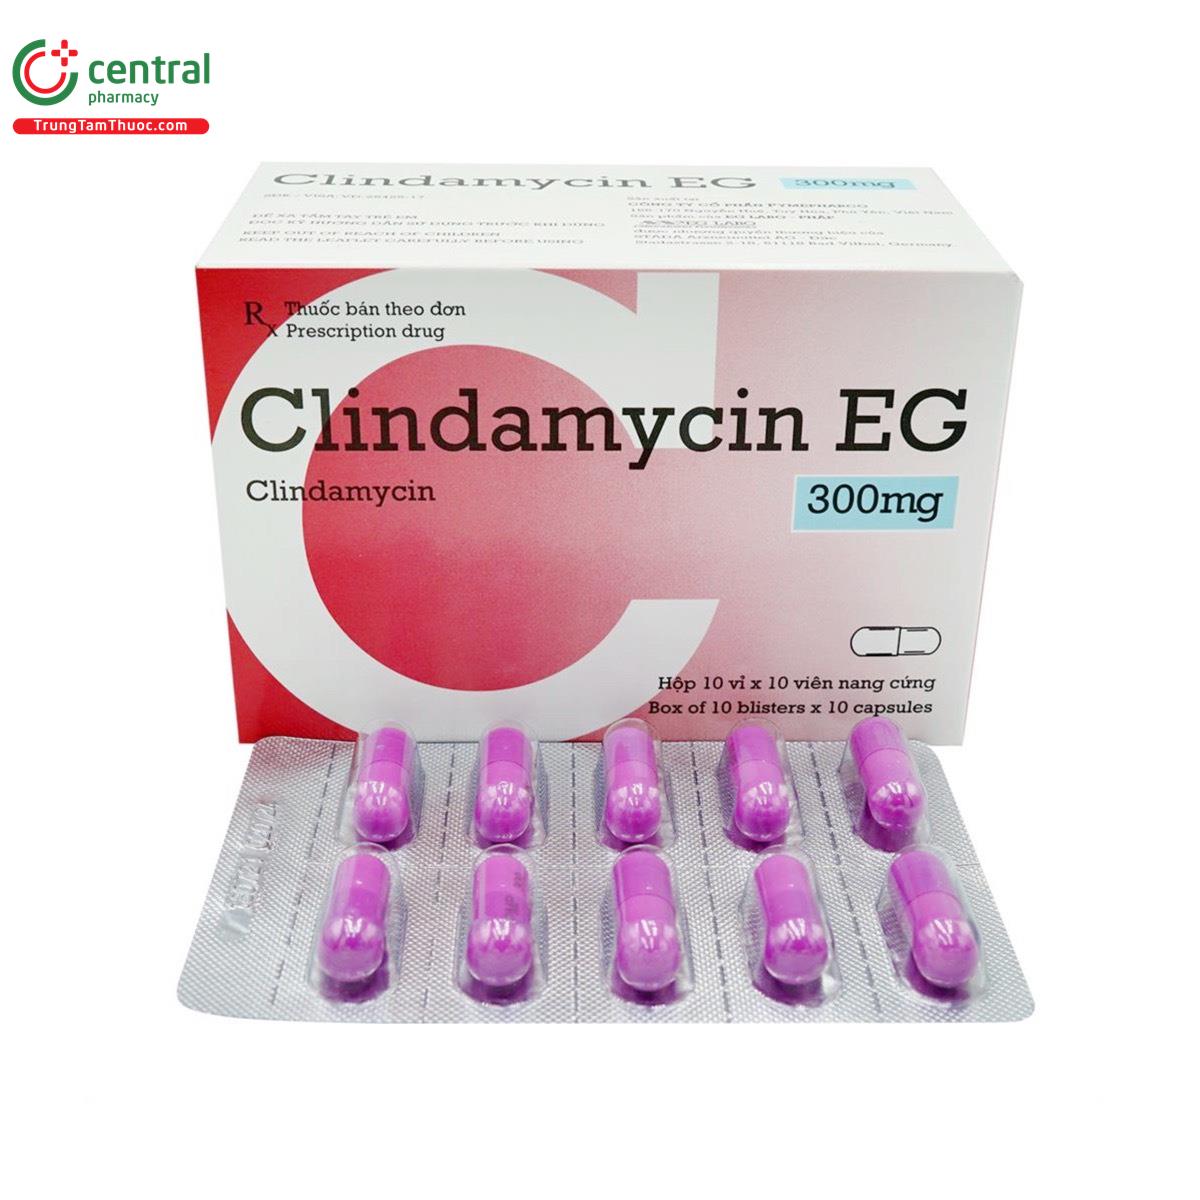 clindamycin eg 300mg 2 I3614